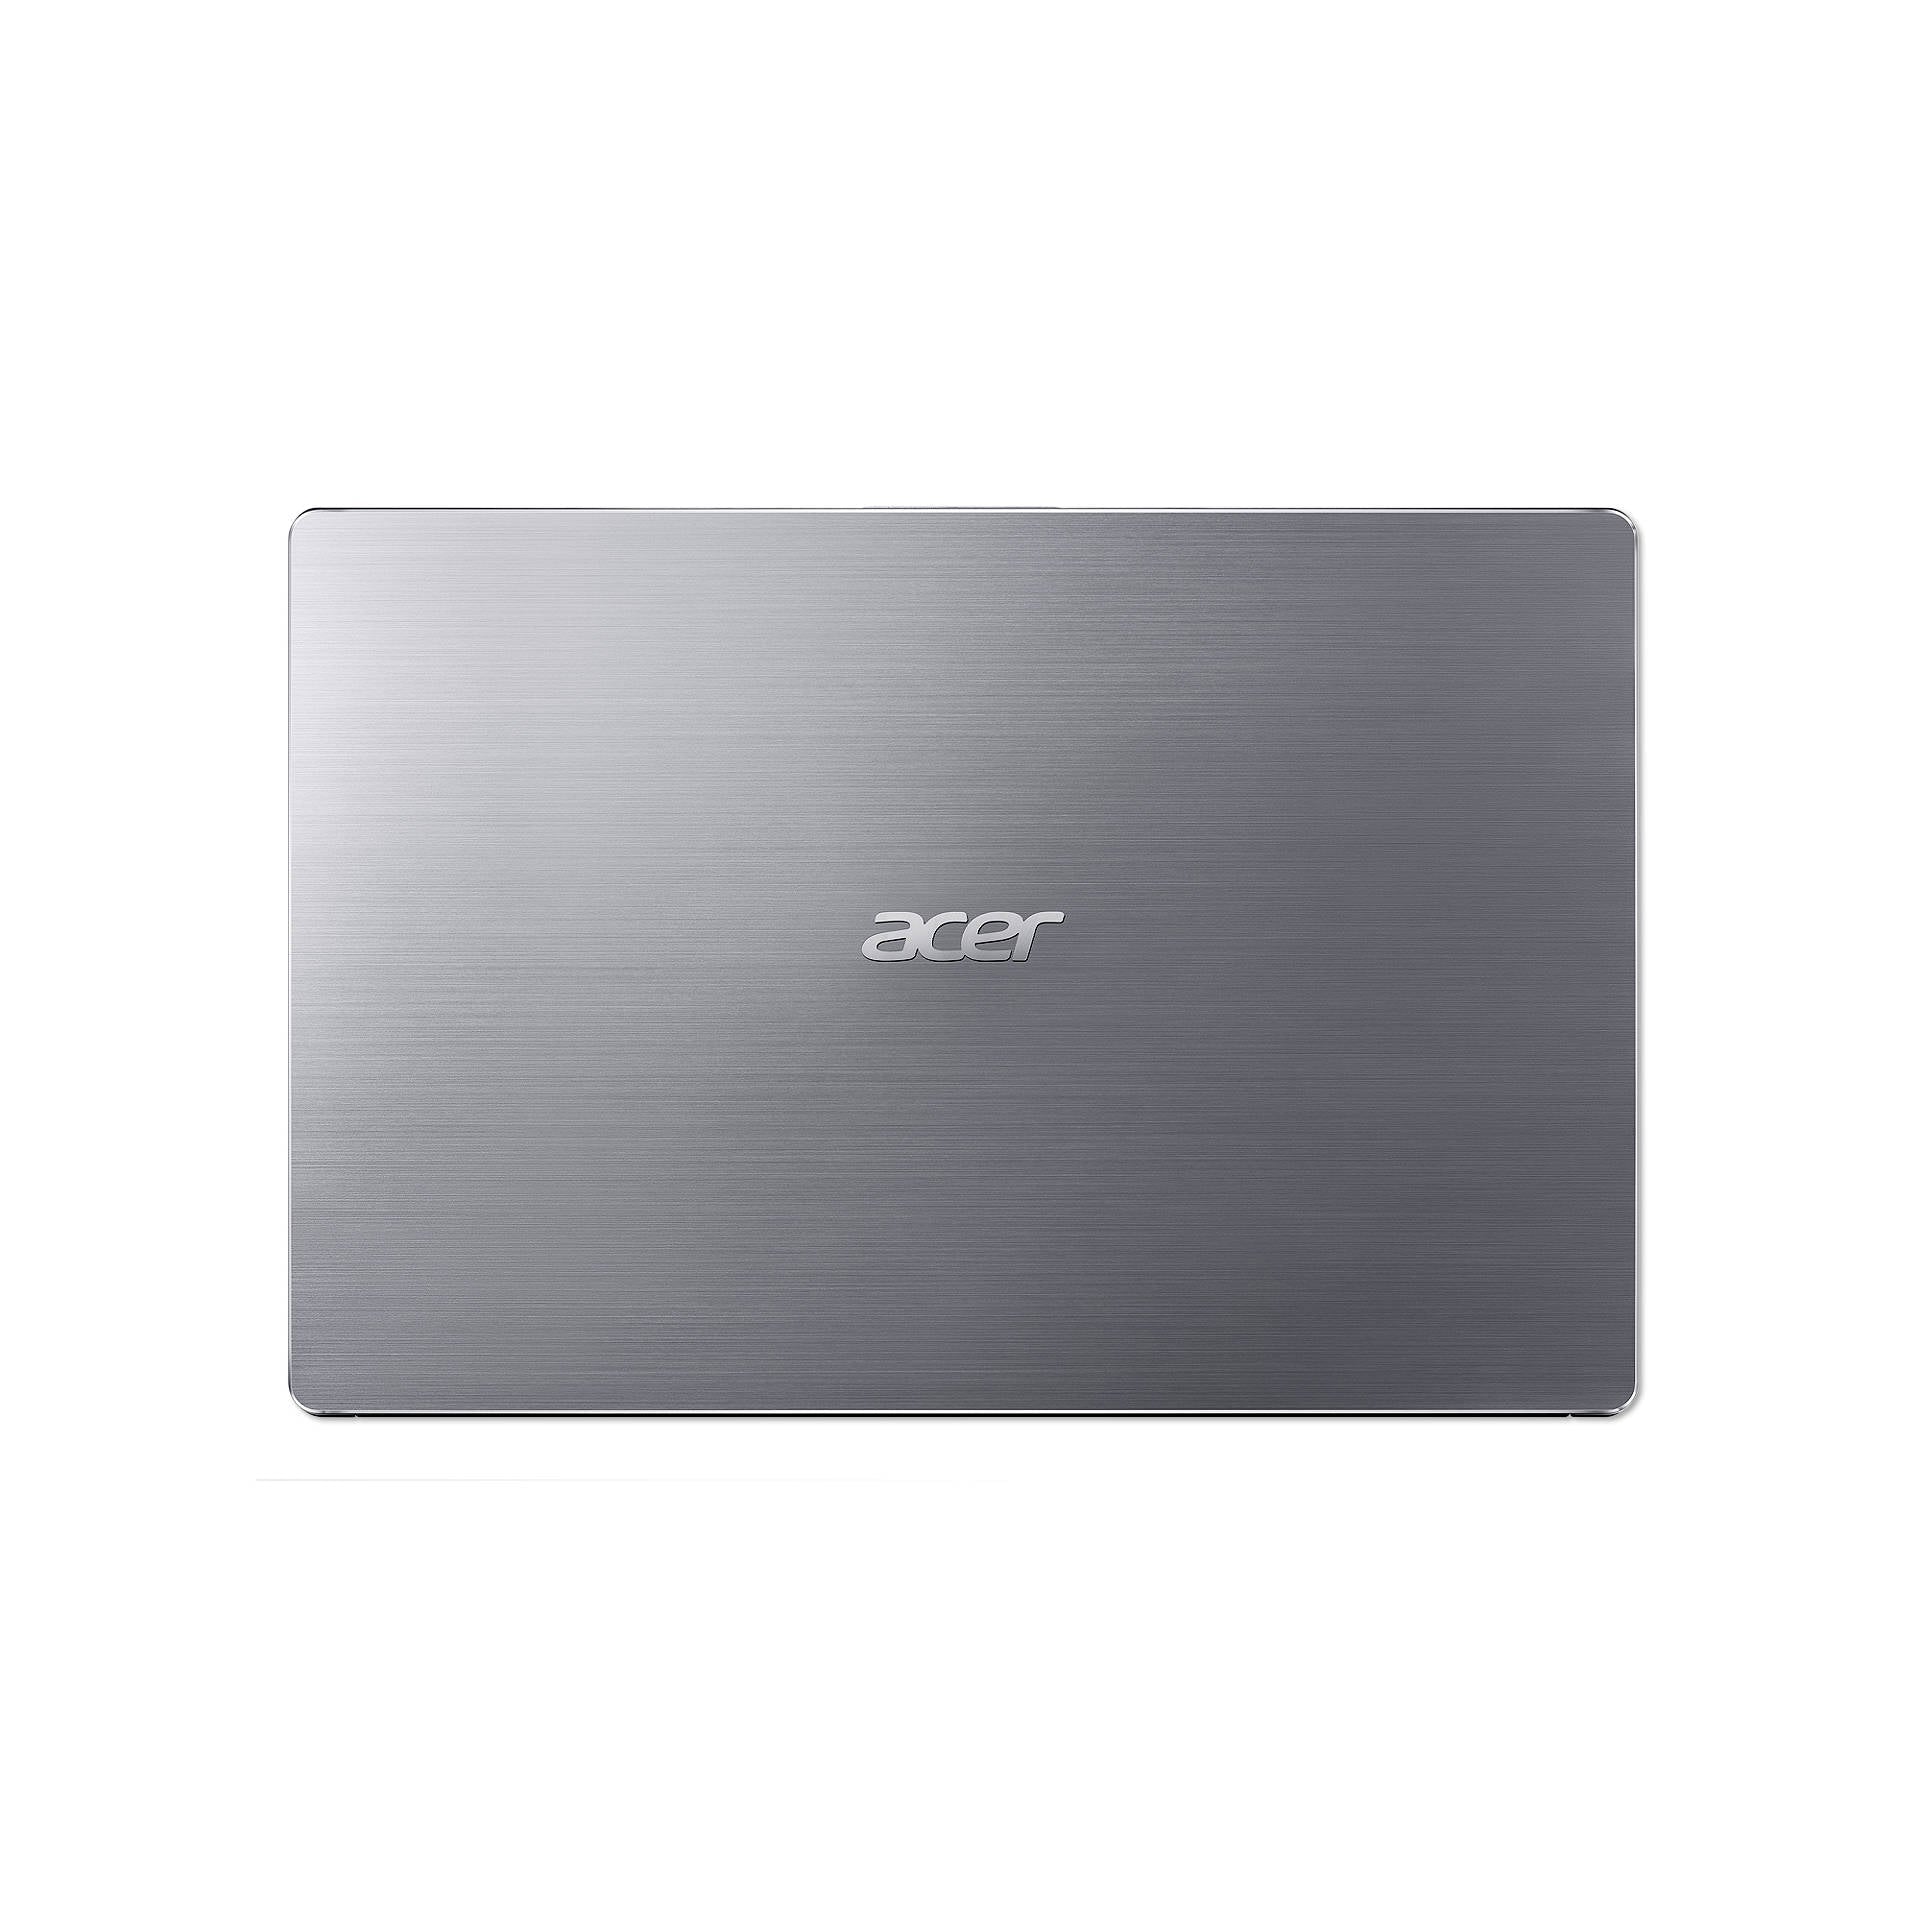 Acer Swift 3 SF314-54-5555 Laptop Intel Core i5-7200U 8GB RAM 128GB SSD 15.6" - Silver